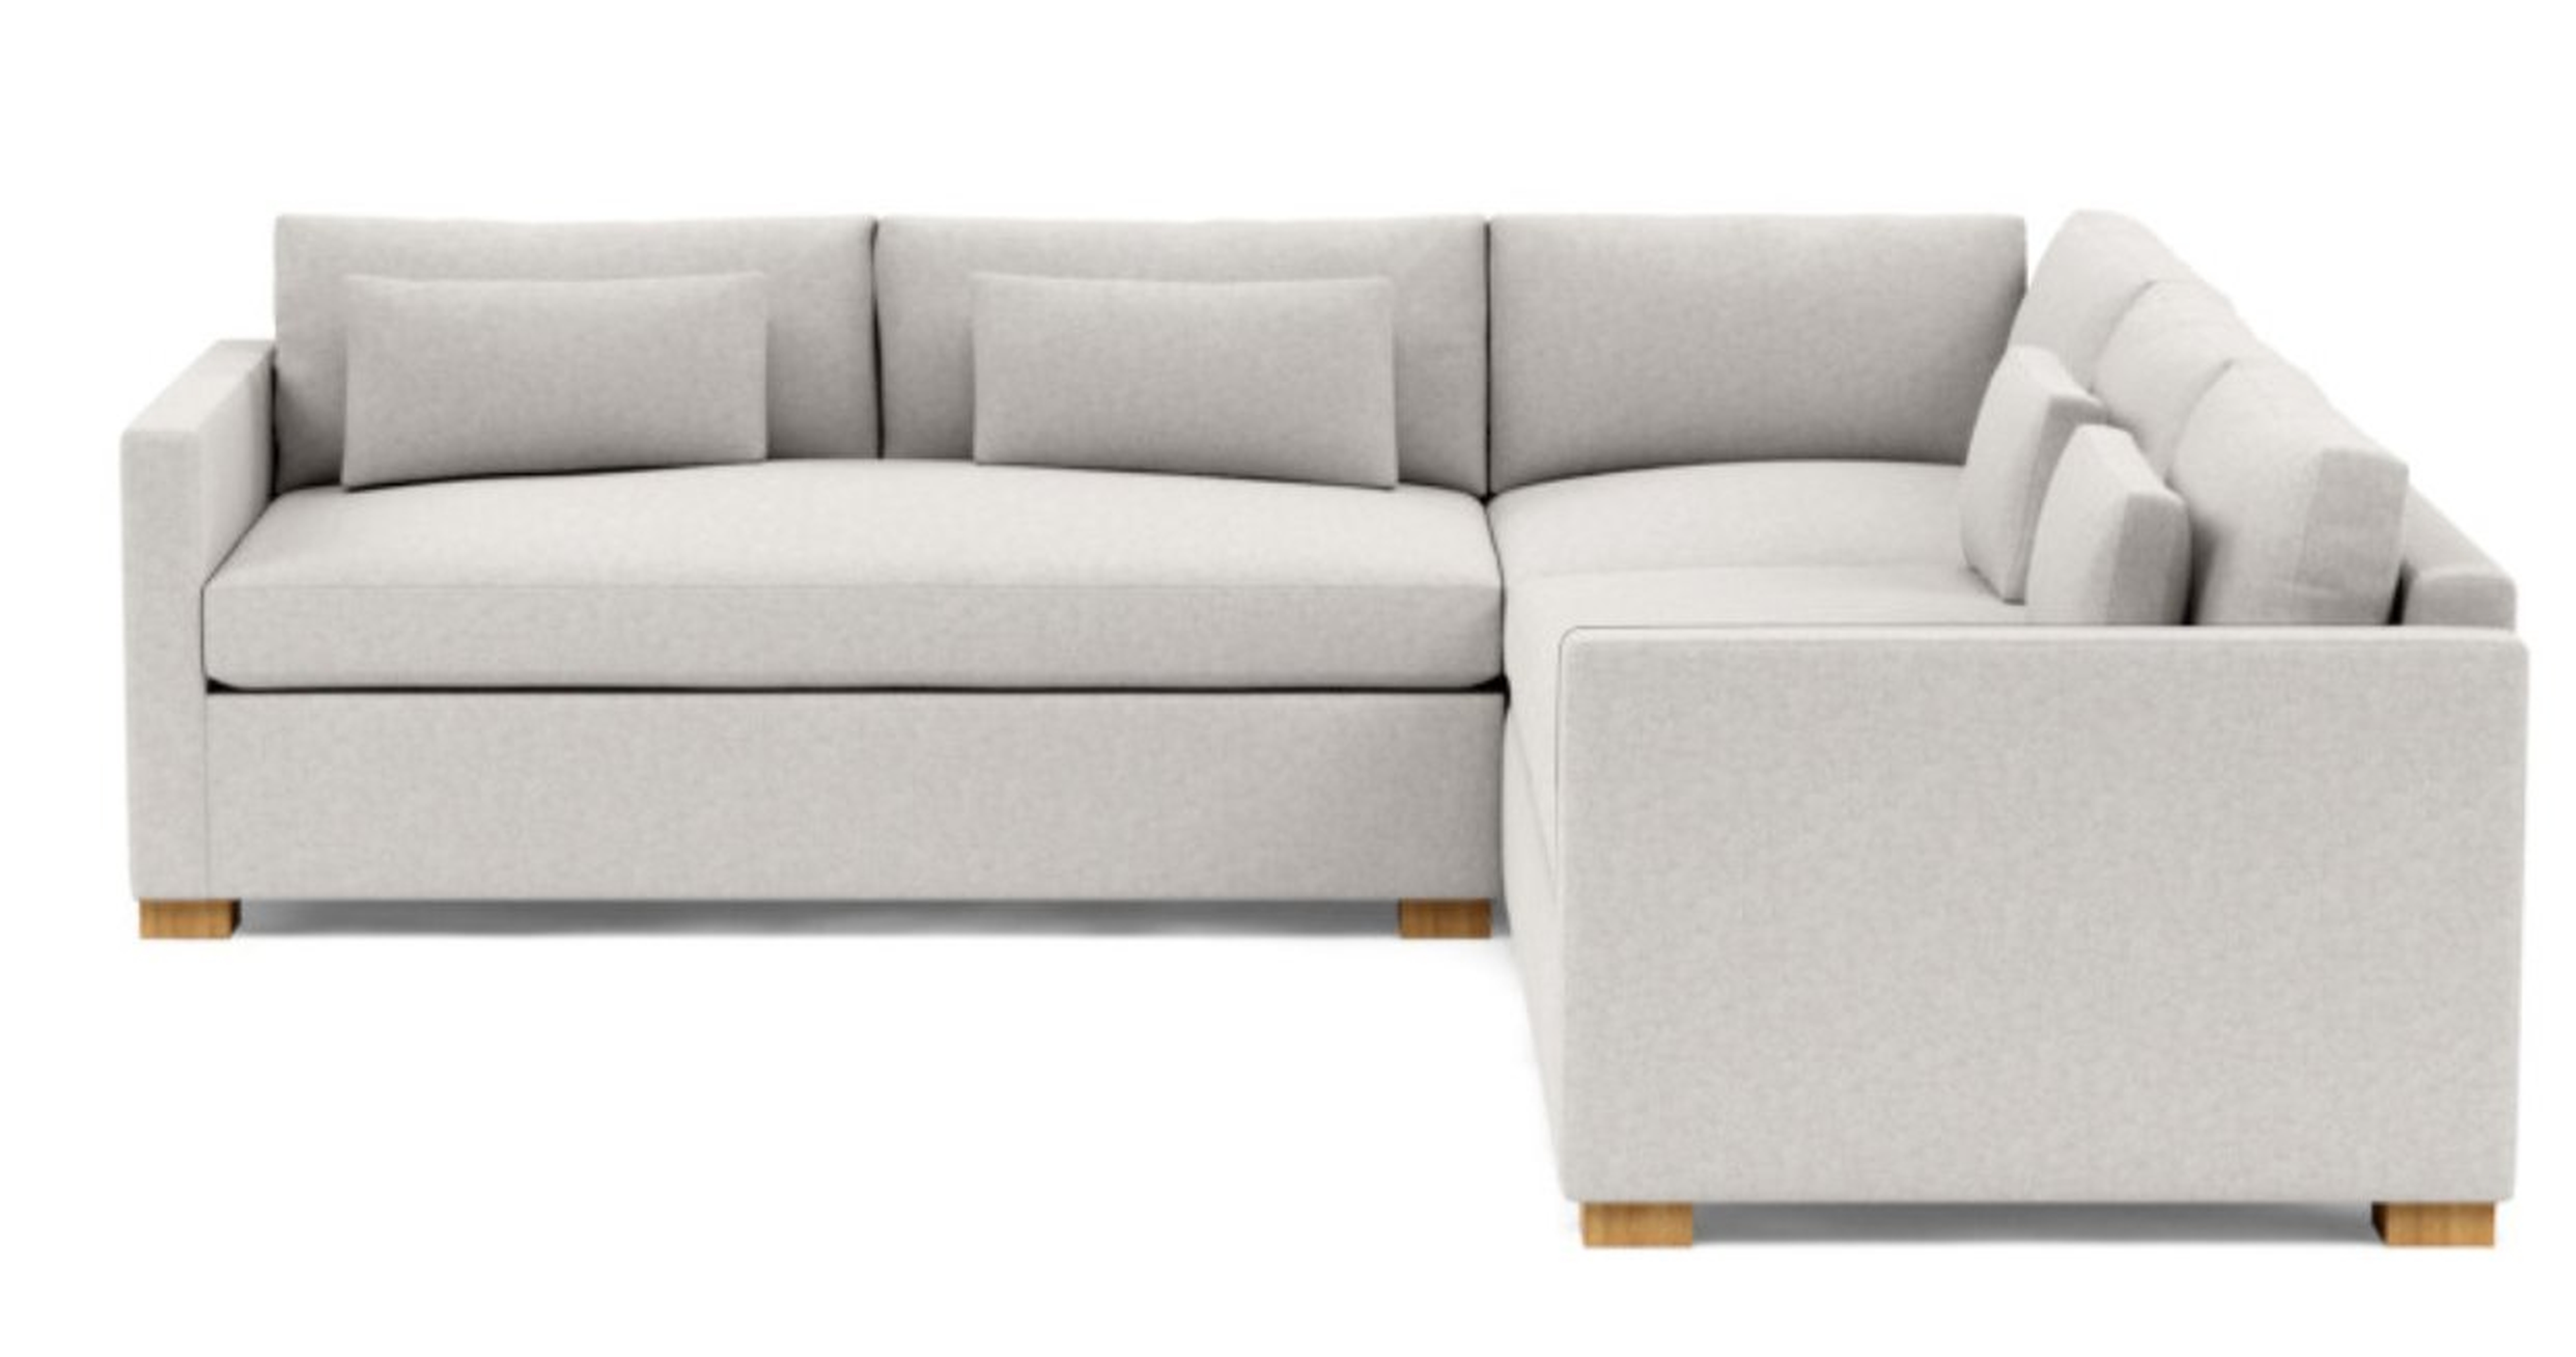 Charly Corner Sectional Sofa; Pebble Heathered Weave; Natural Oak Block Legs; Down alternative; 104"; Standard Depth Cushions; Bench Cushions - Interior Define